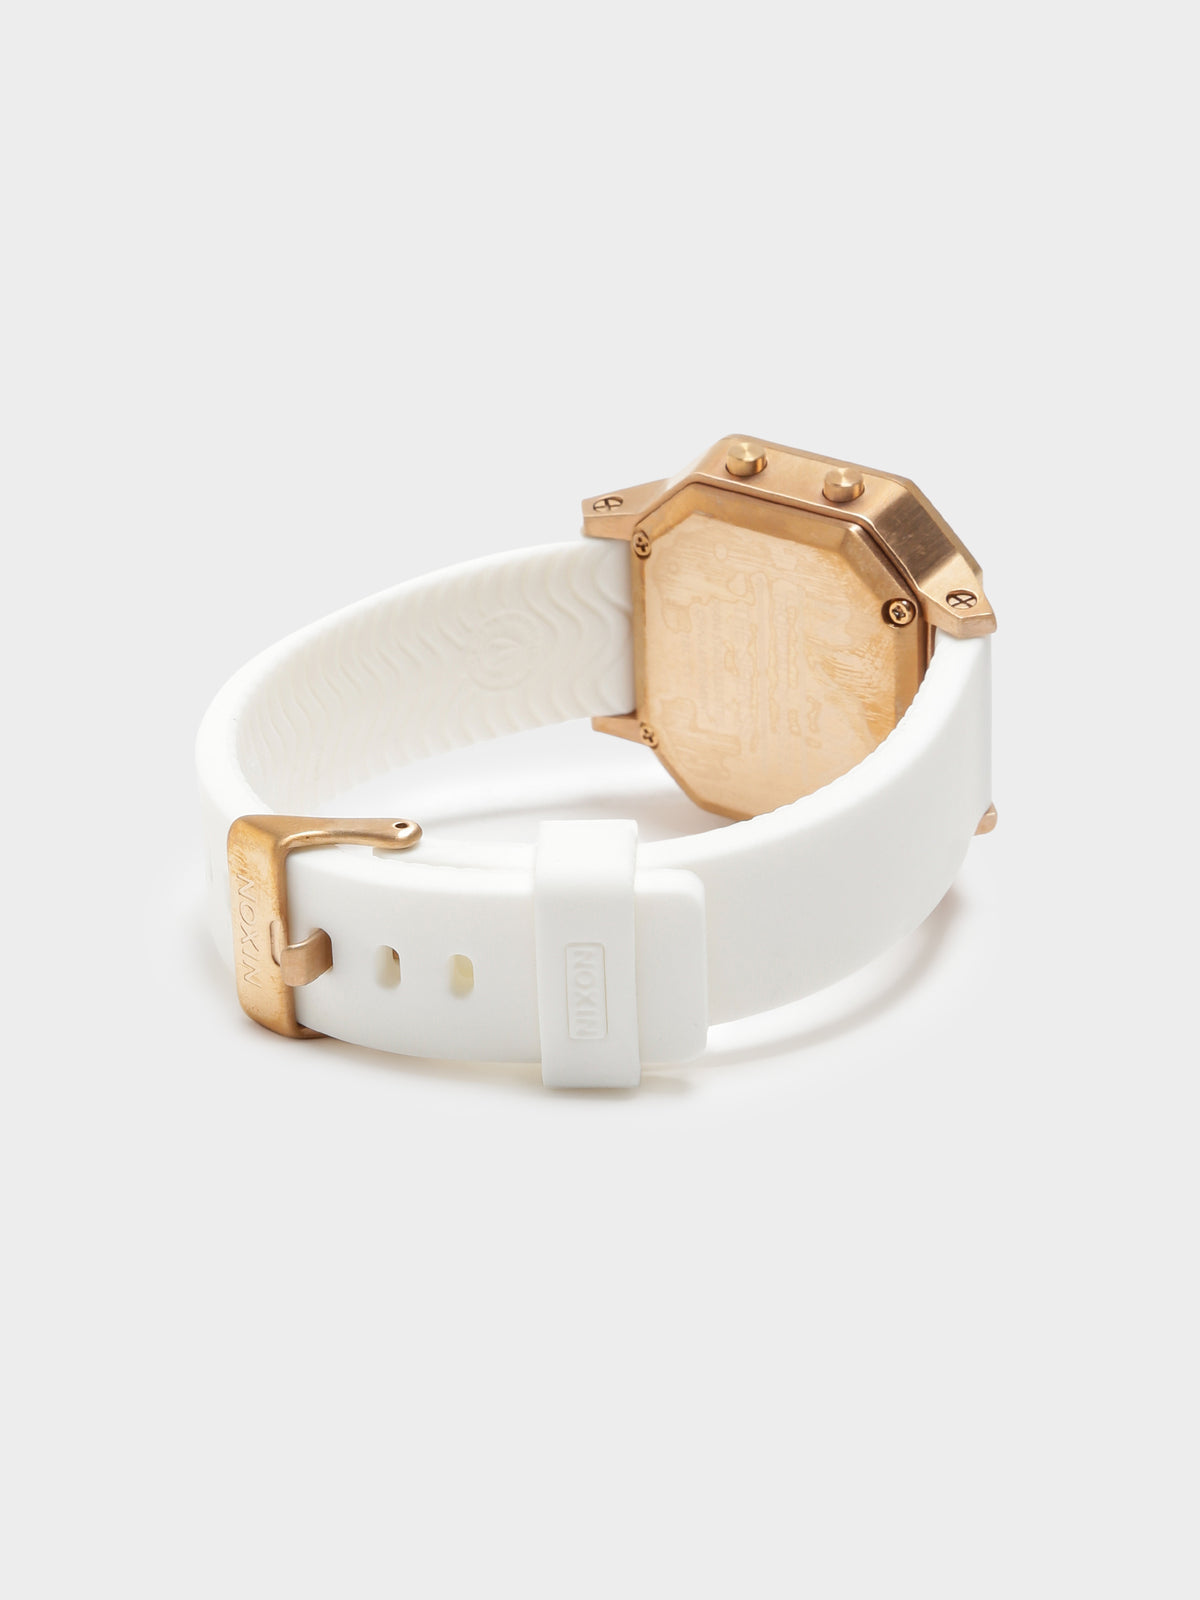 Siren SS Digital Watch in White &amp; Rose Gold